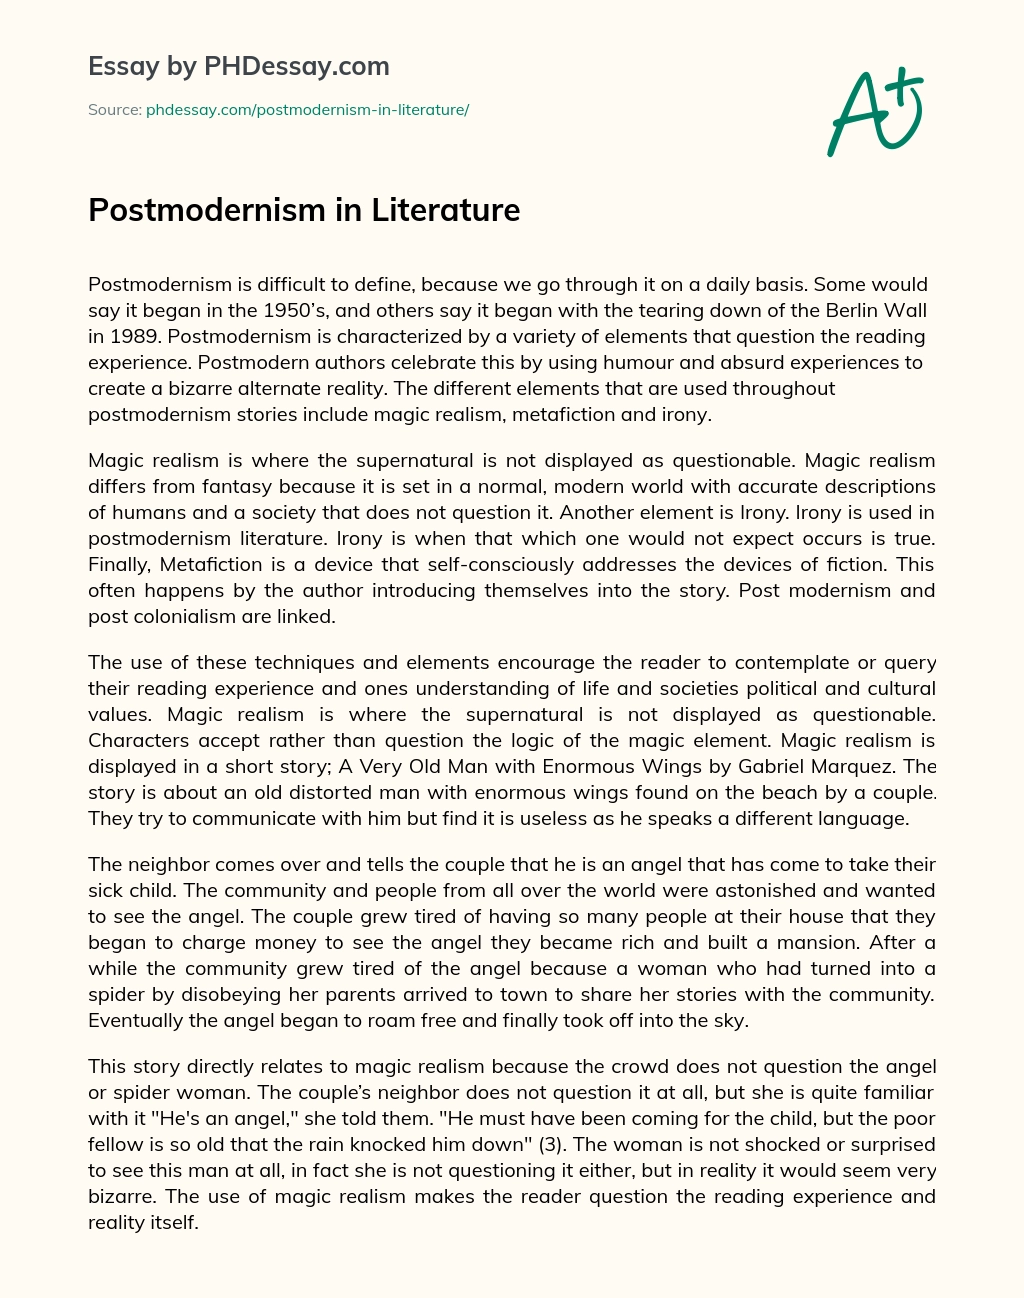 Postmodernism in Literature essay